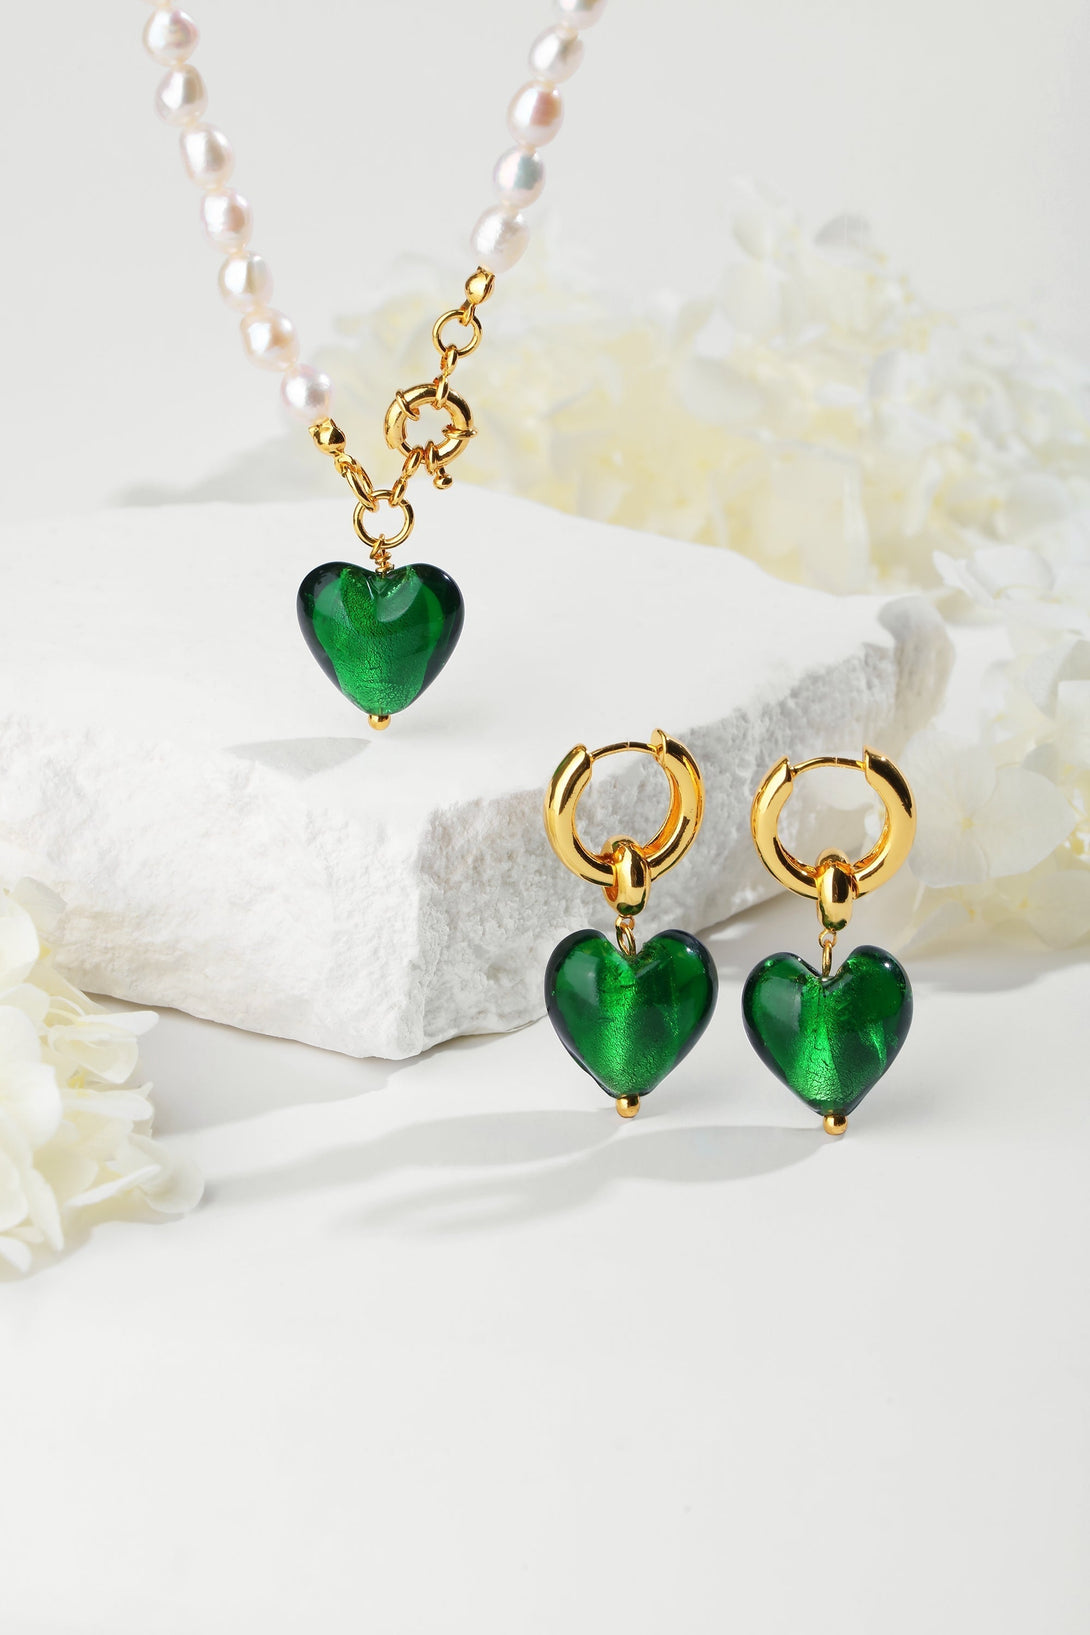 Esmée Green Glaze Heart Pendant Pearl Necklace - Classicharms